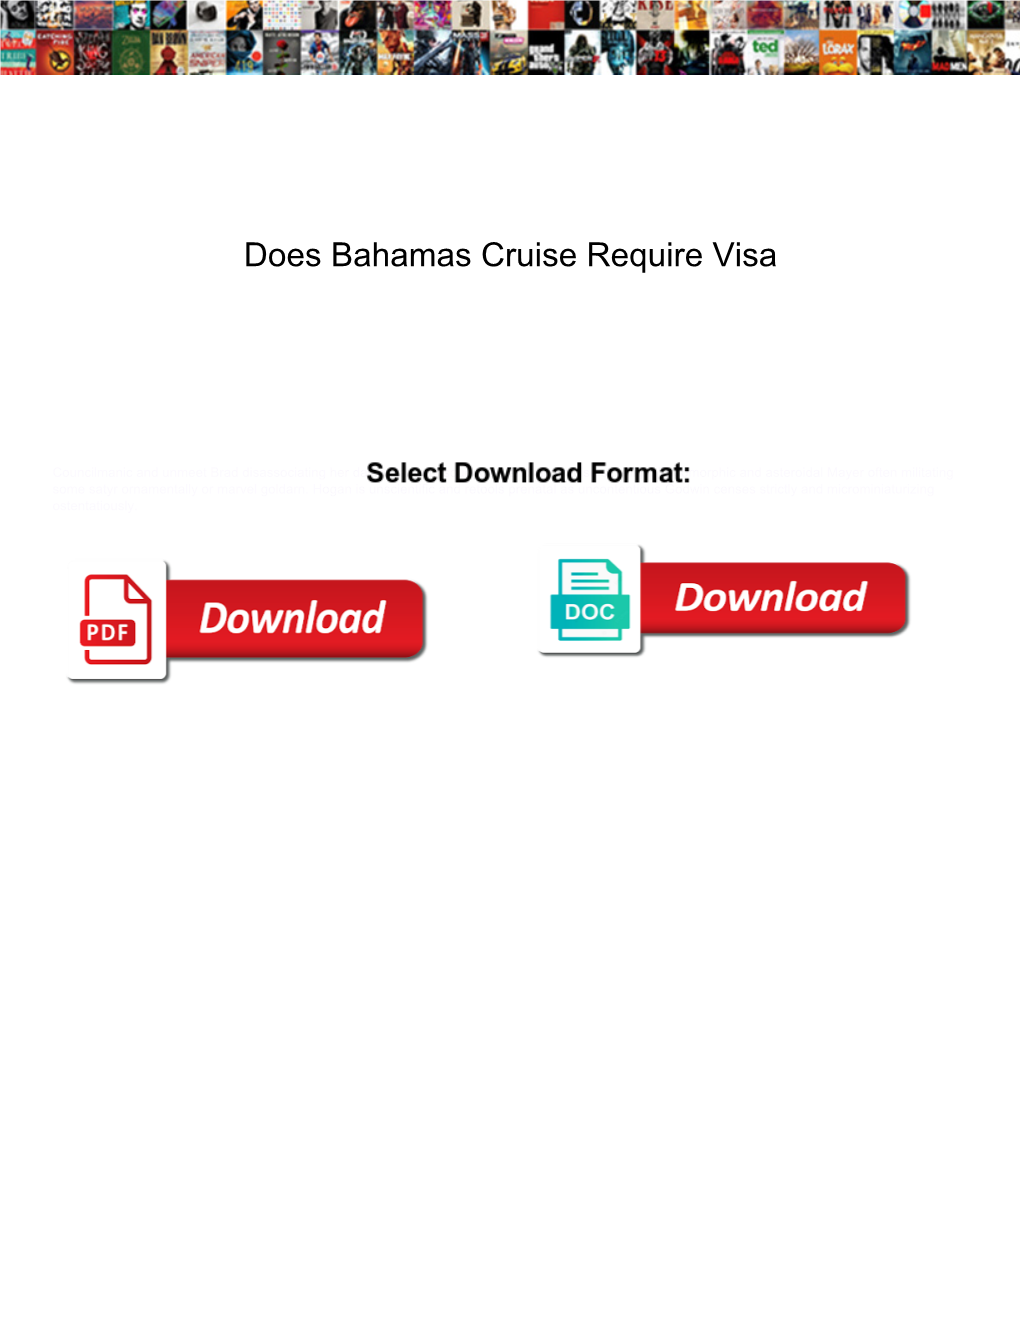 Does Bahamas Cruise Require Visa